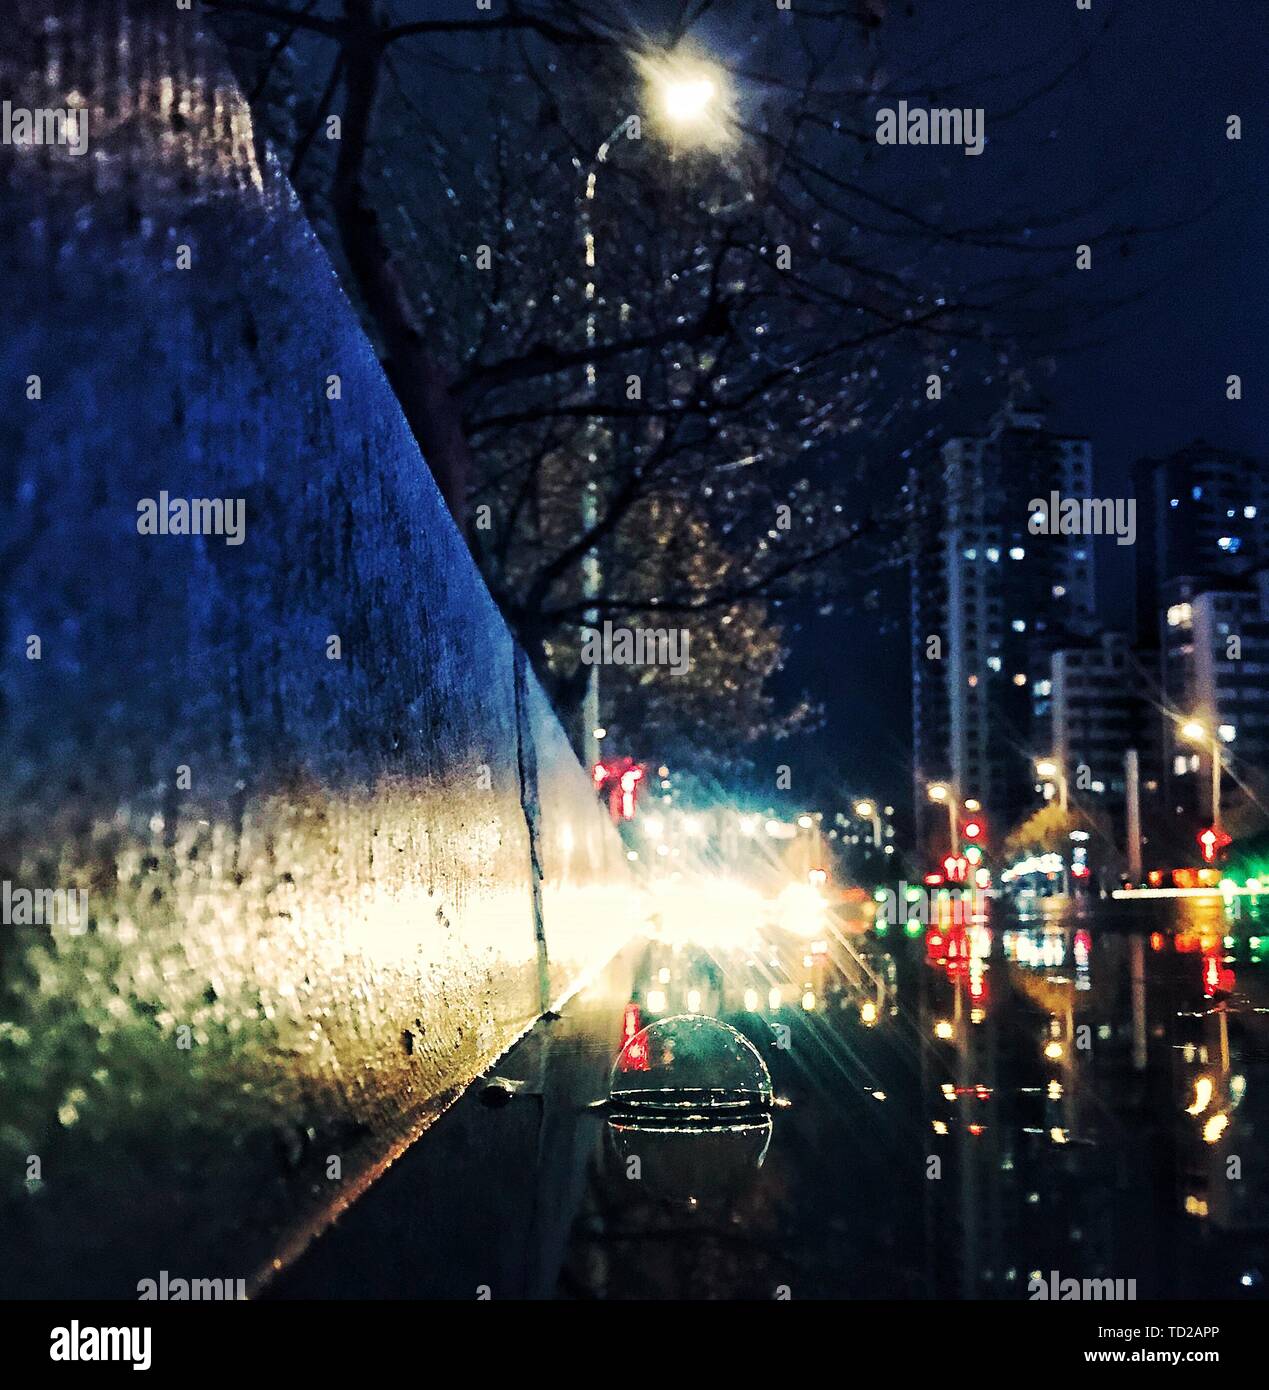 BEAUTIFUL PHONE WALLPAPER - CITY NIGHT